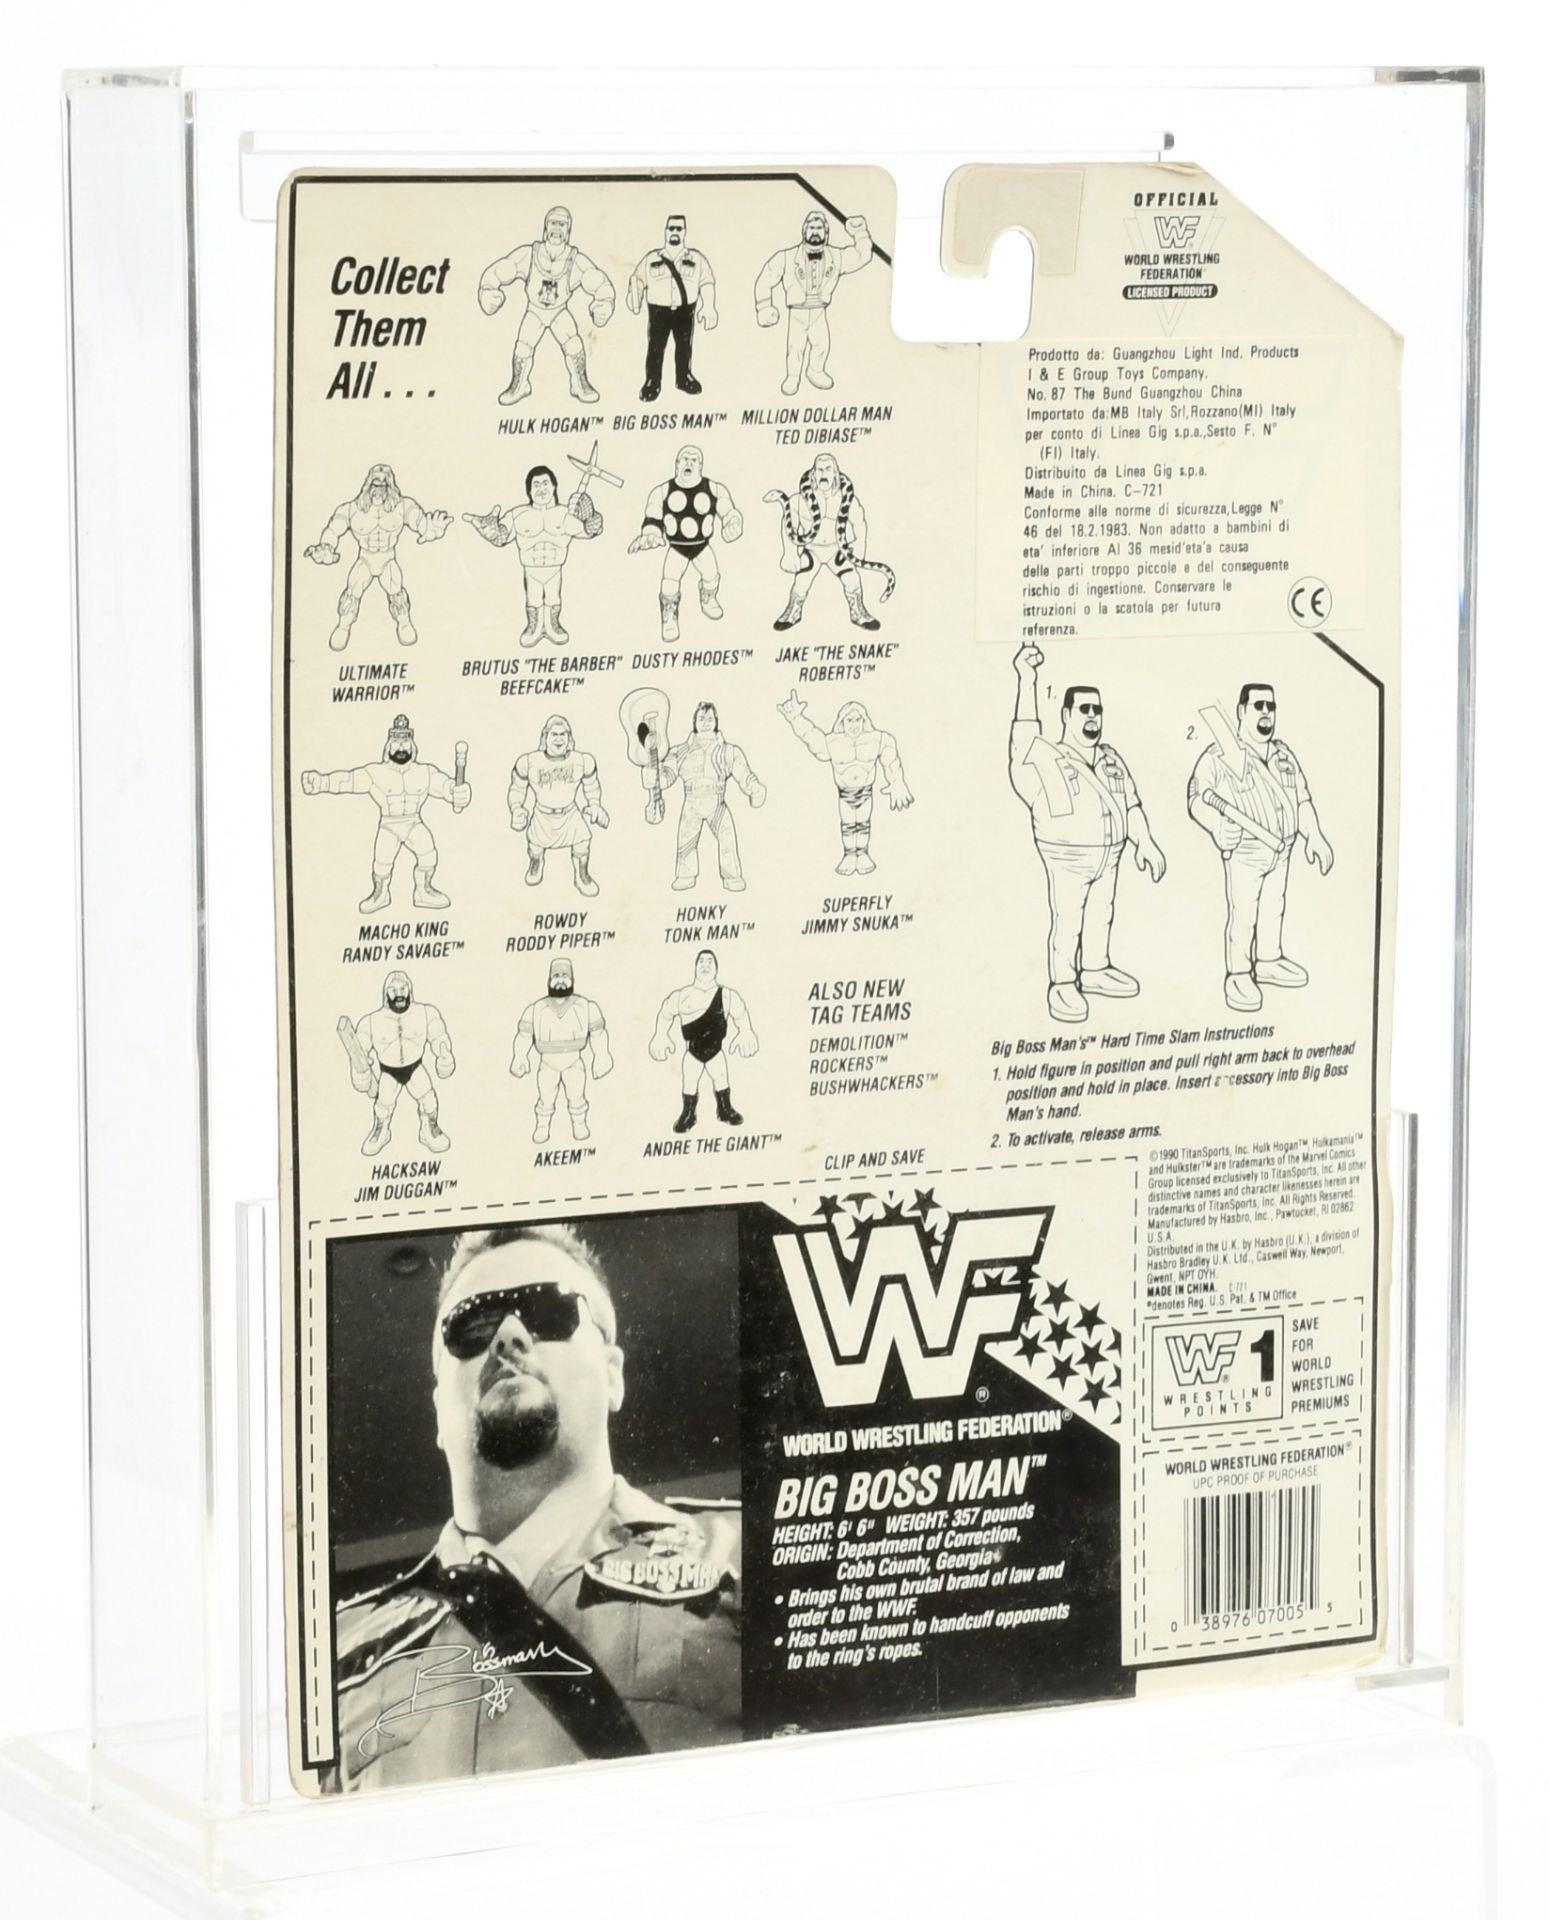 Hasbro WWF vintage 1990 Big Boss Man Wrestling figure - Image 2 of 2